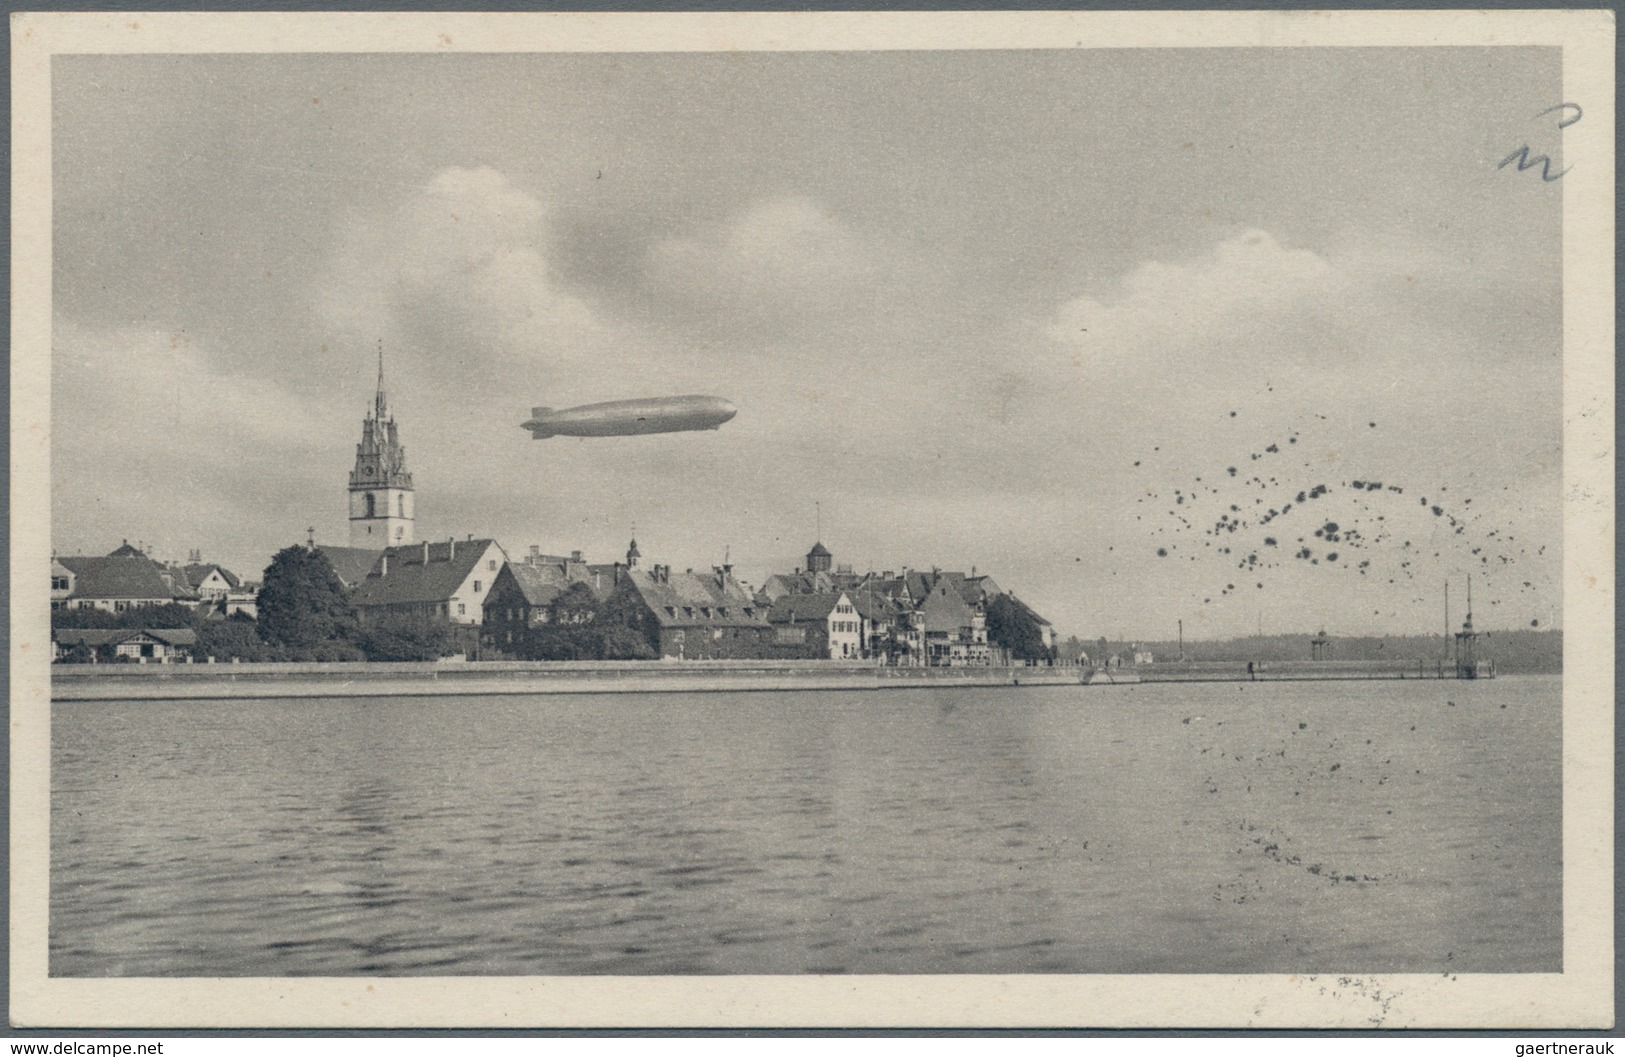 Zeppelinpost Deutschland: 1932. Original German Cover Flown On The Graf Zeppelin Airship's 1932 7. S - Luchtpost & Zeppelin